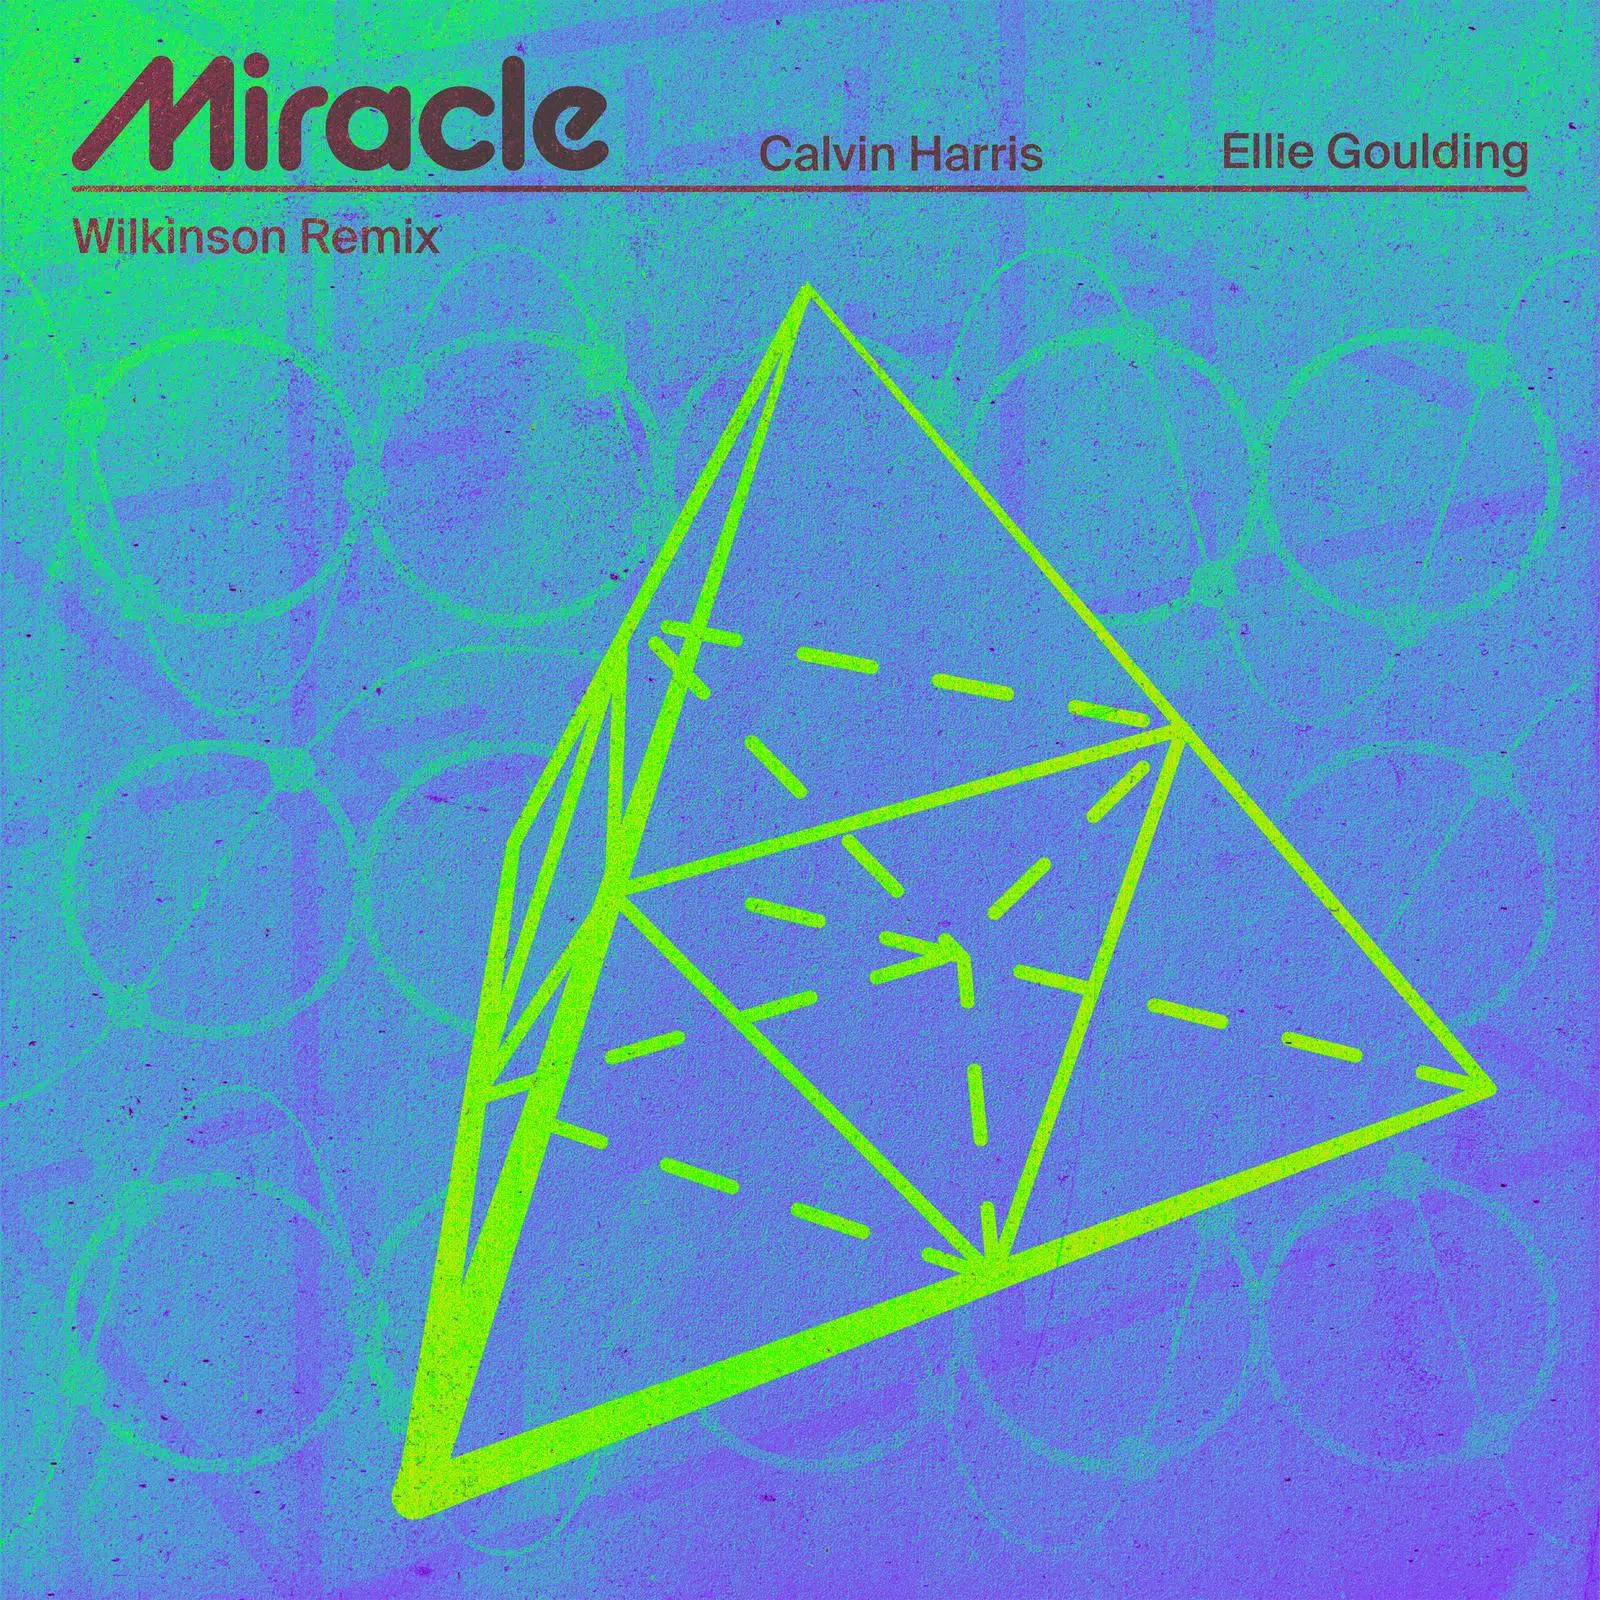 Wilkinson Remix of Calvin Harris “Miracle”